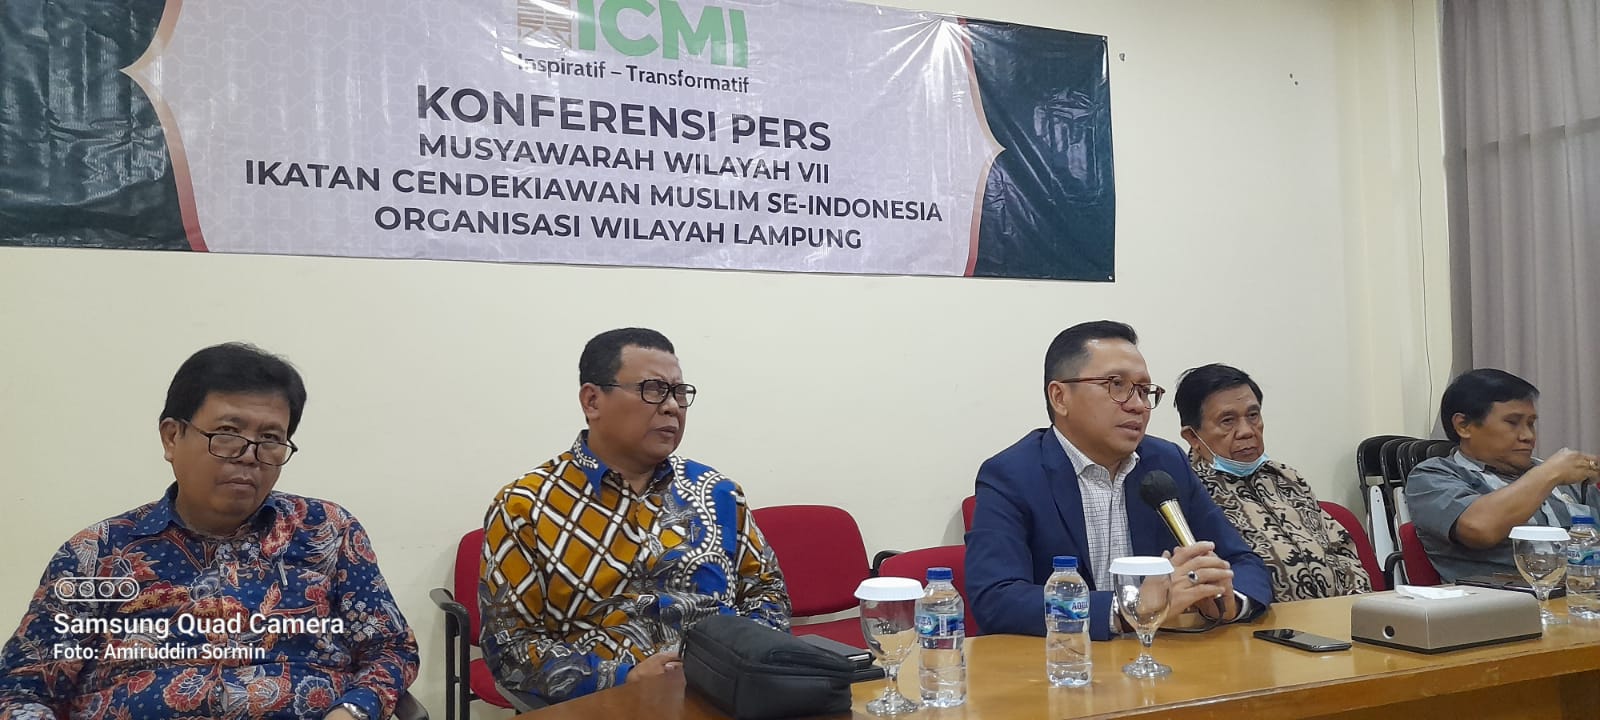 Gelar Muswil ke-7, ICMI Lampung Komit Sumbangkan Pemikiran dan Keahlian untuk Kemajuan Lampung